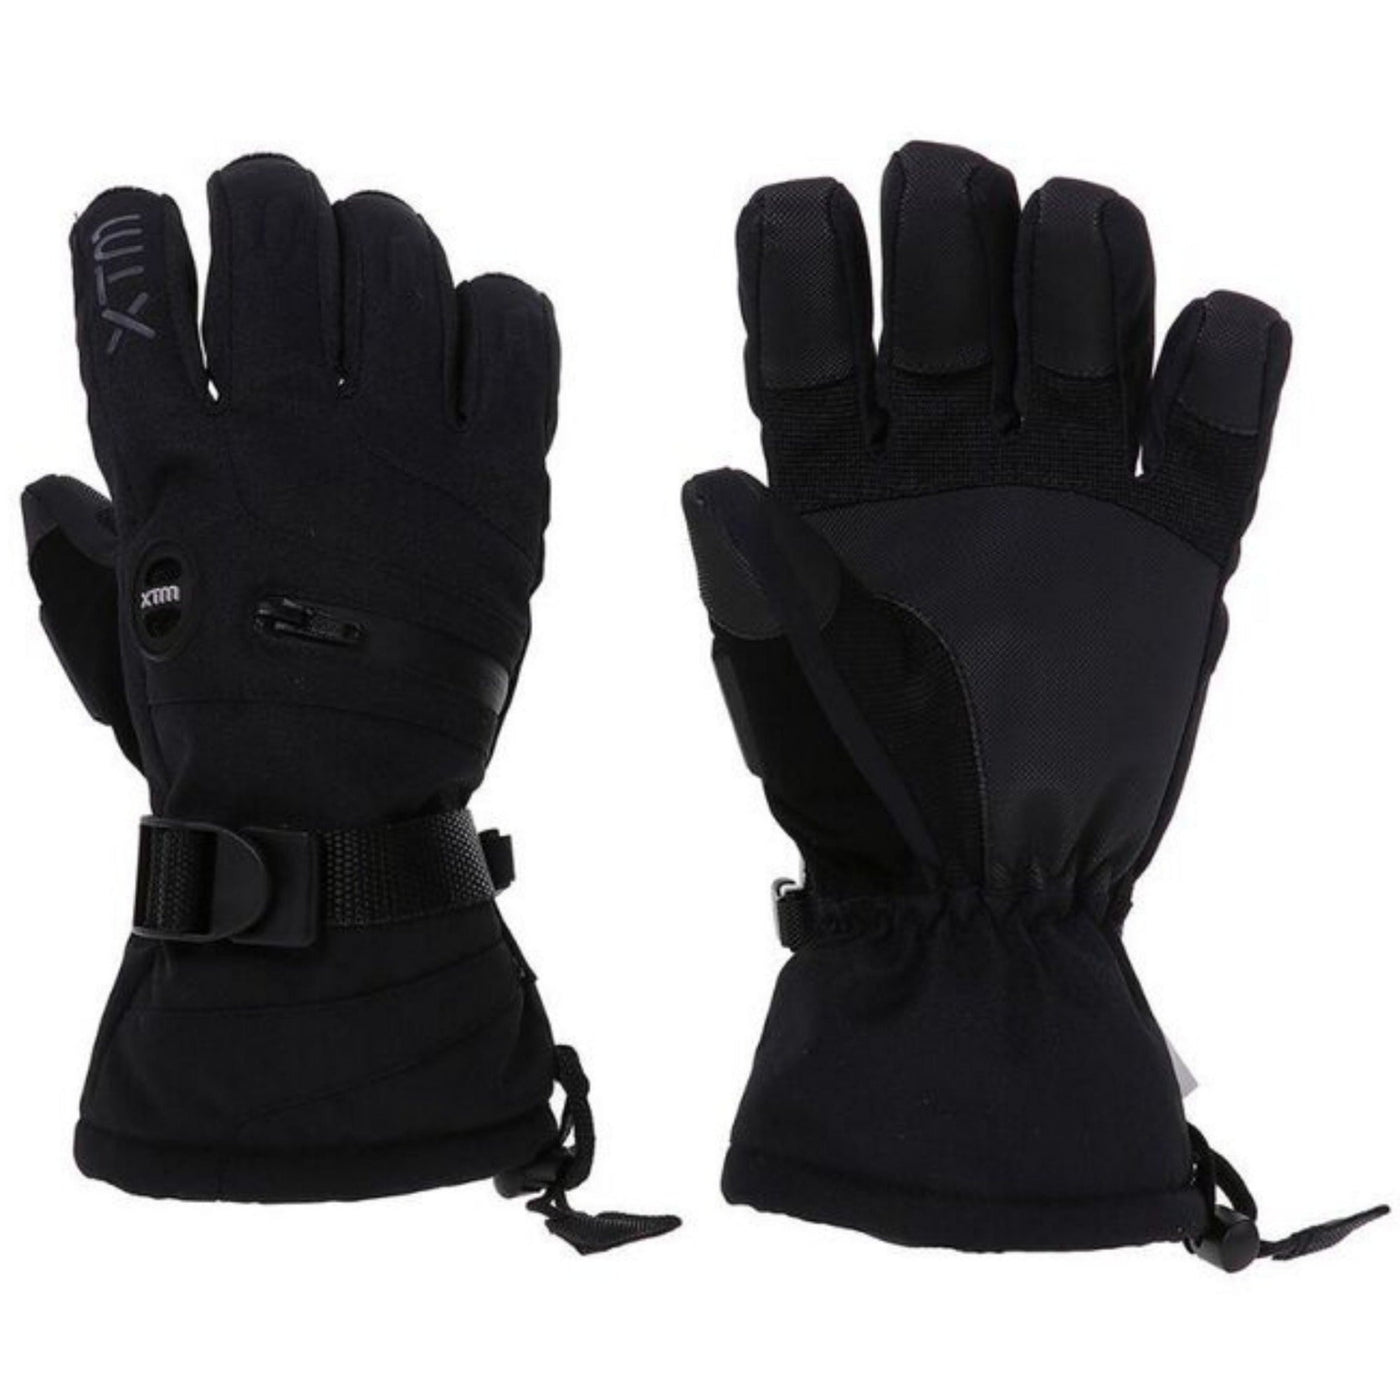 XTM Kids Miso Snow Gloves